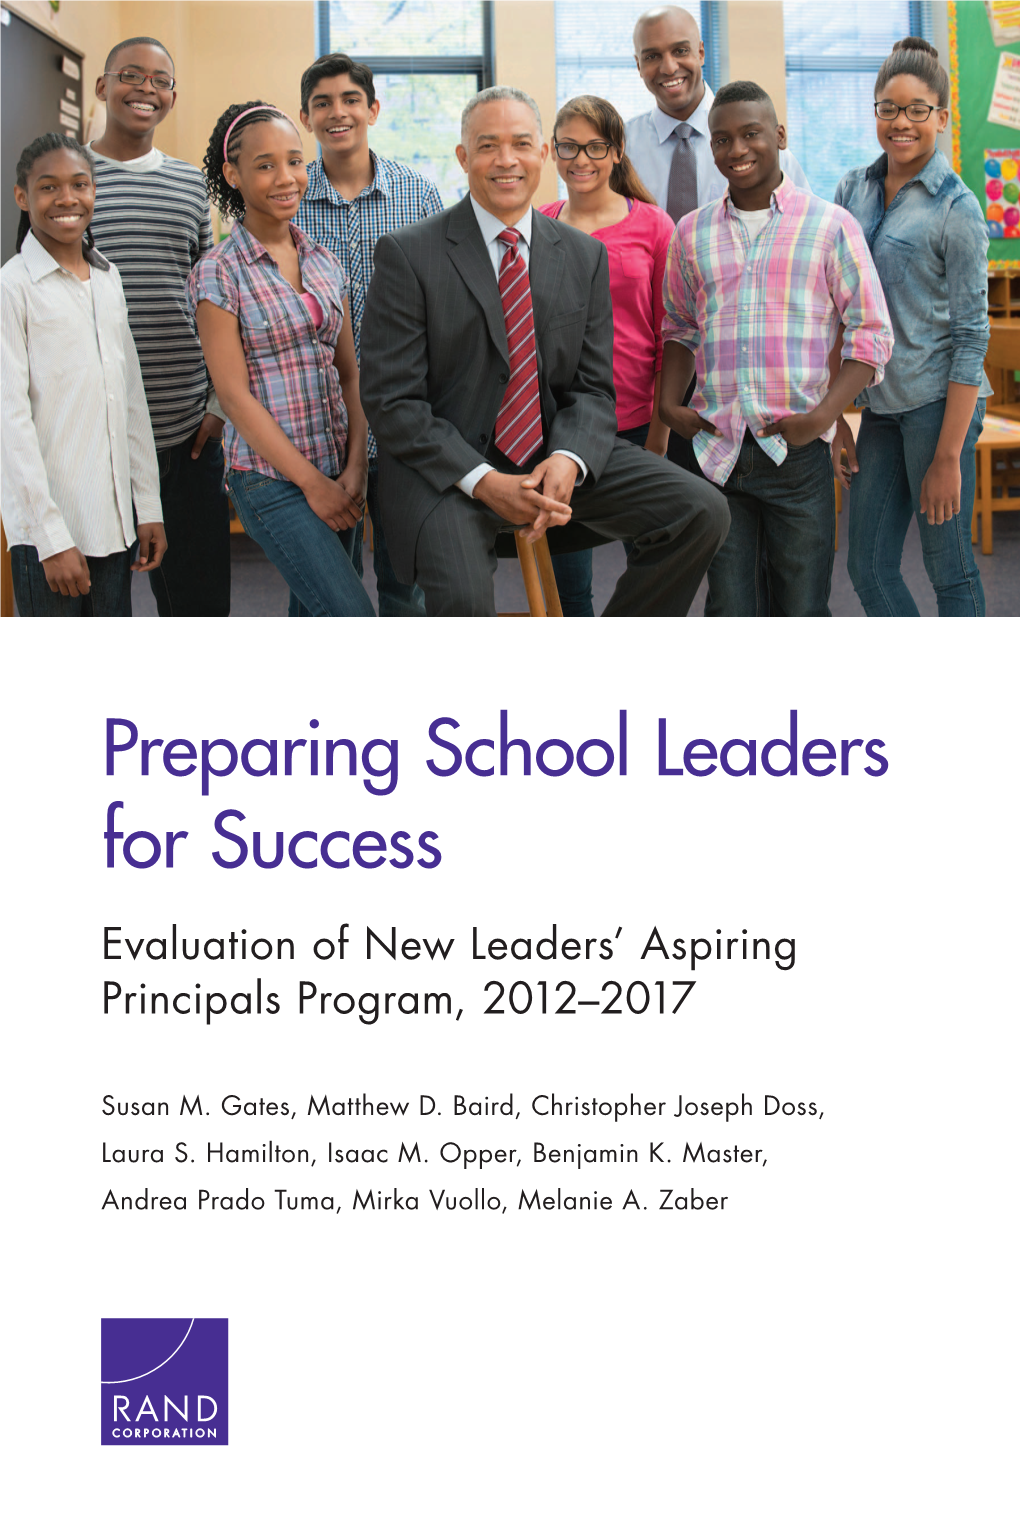 Evaluation of New Leaders' Aspiring Principals Program, 2012-2017